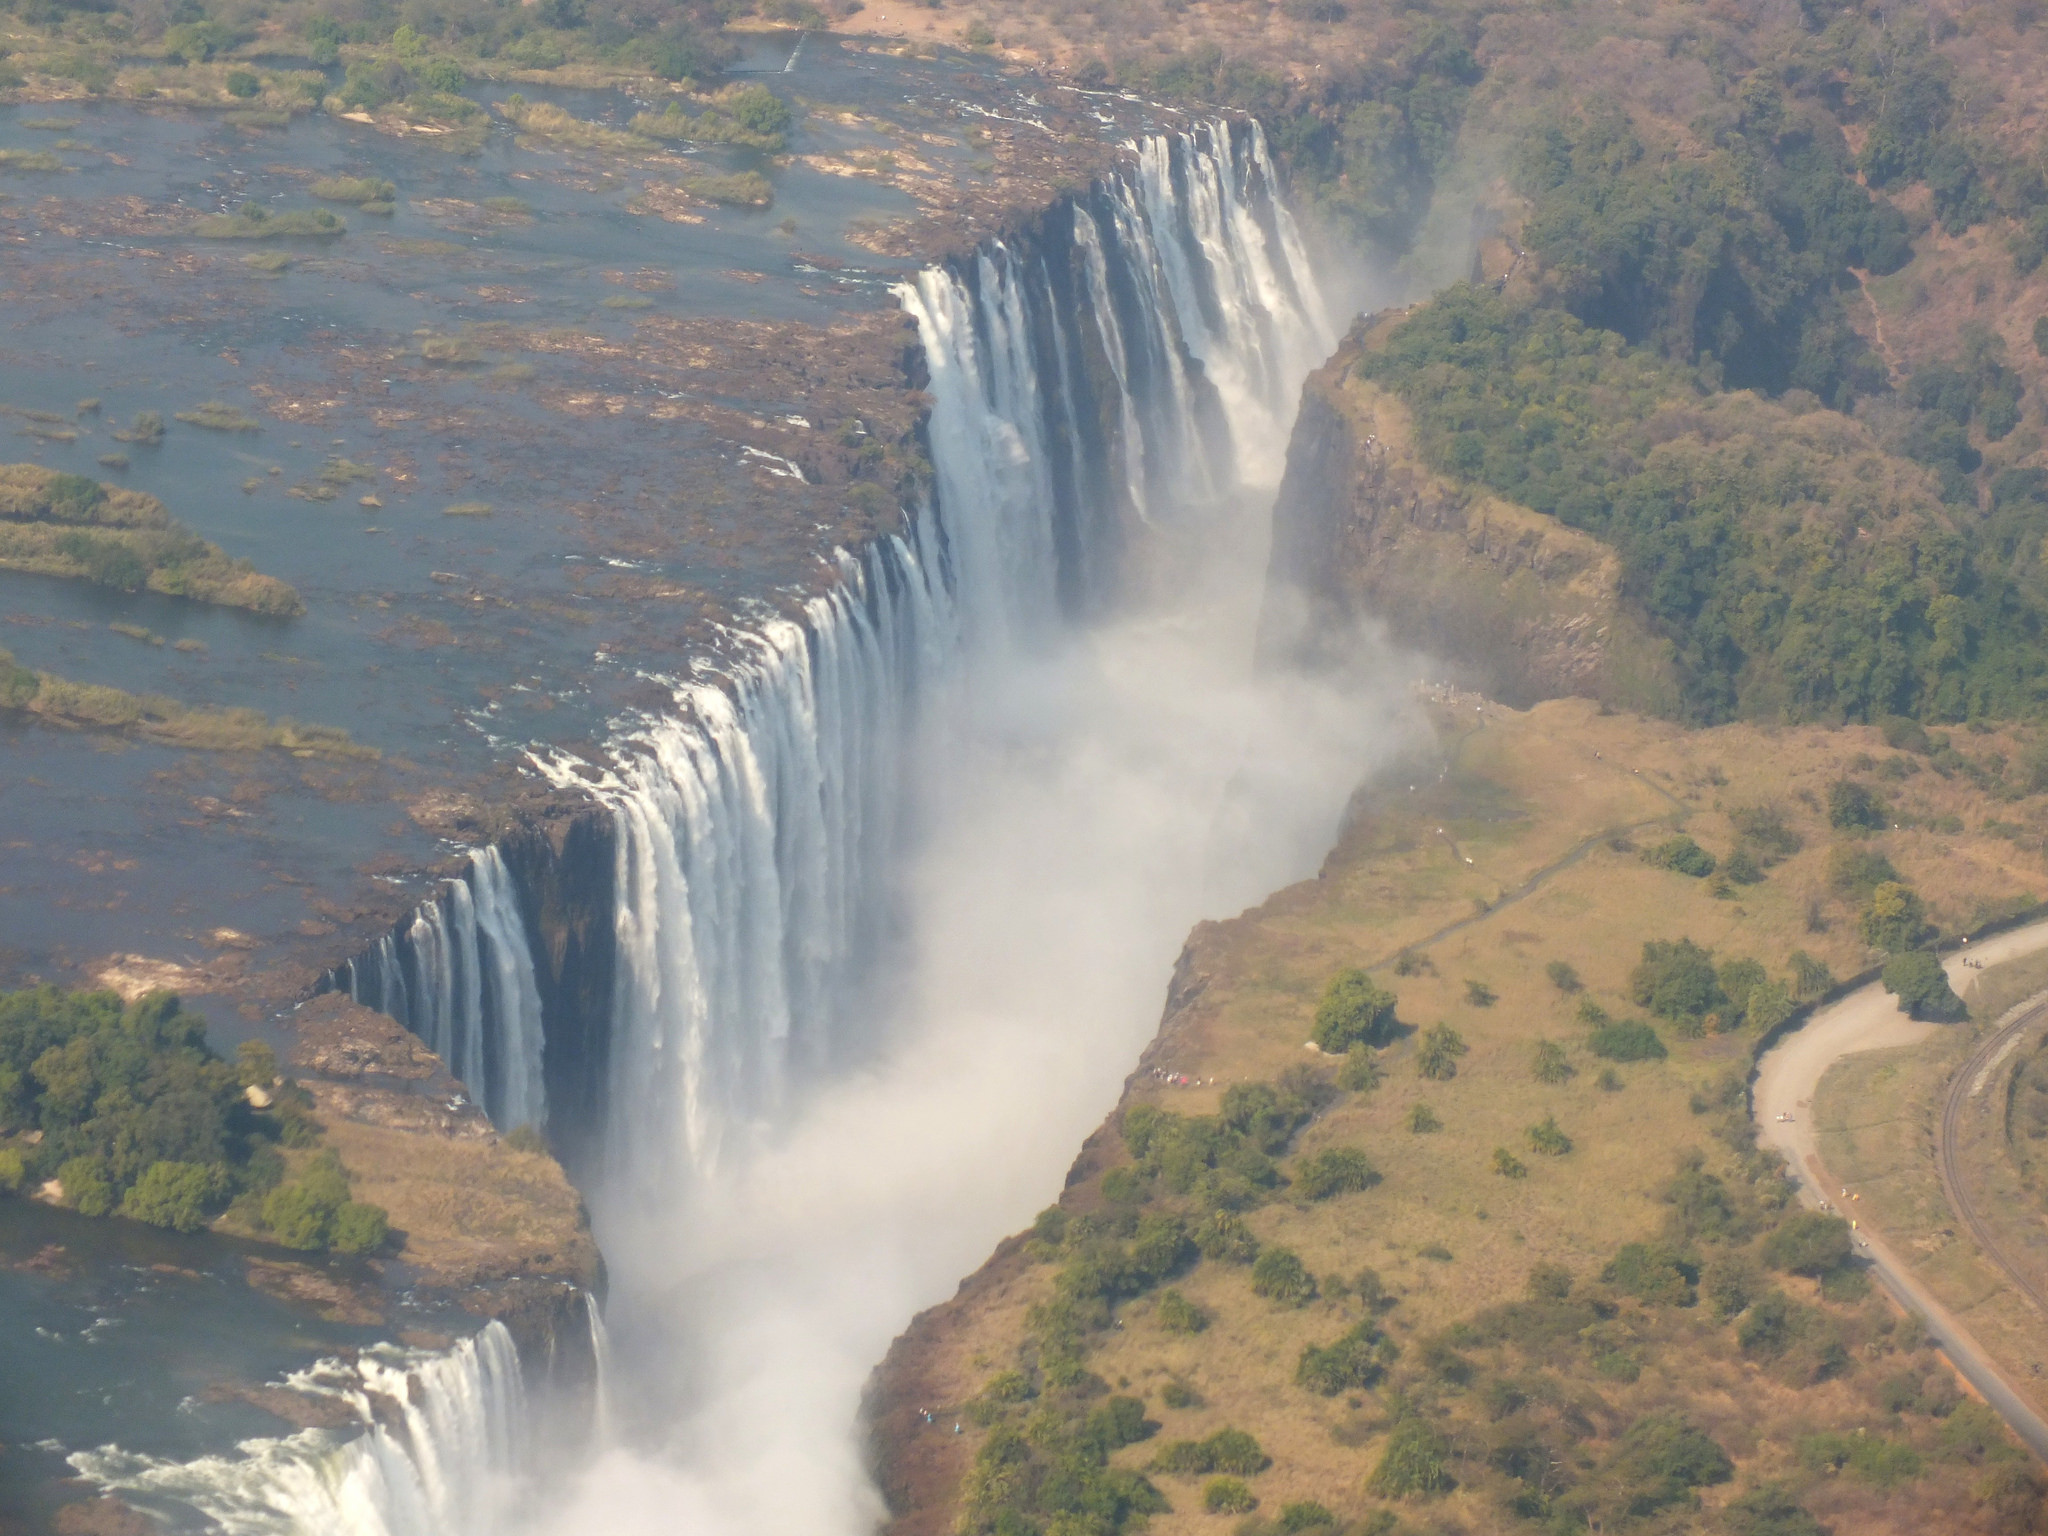 Cataratas de Vitória zimbabwe.jpg